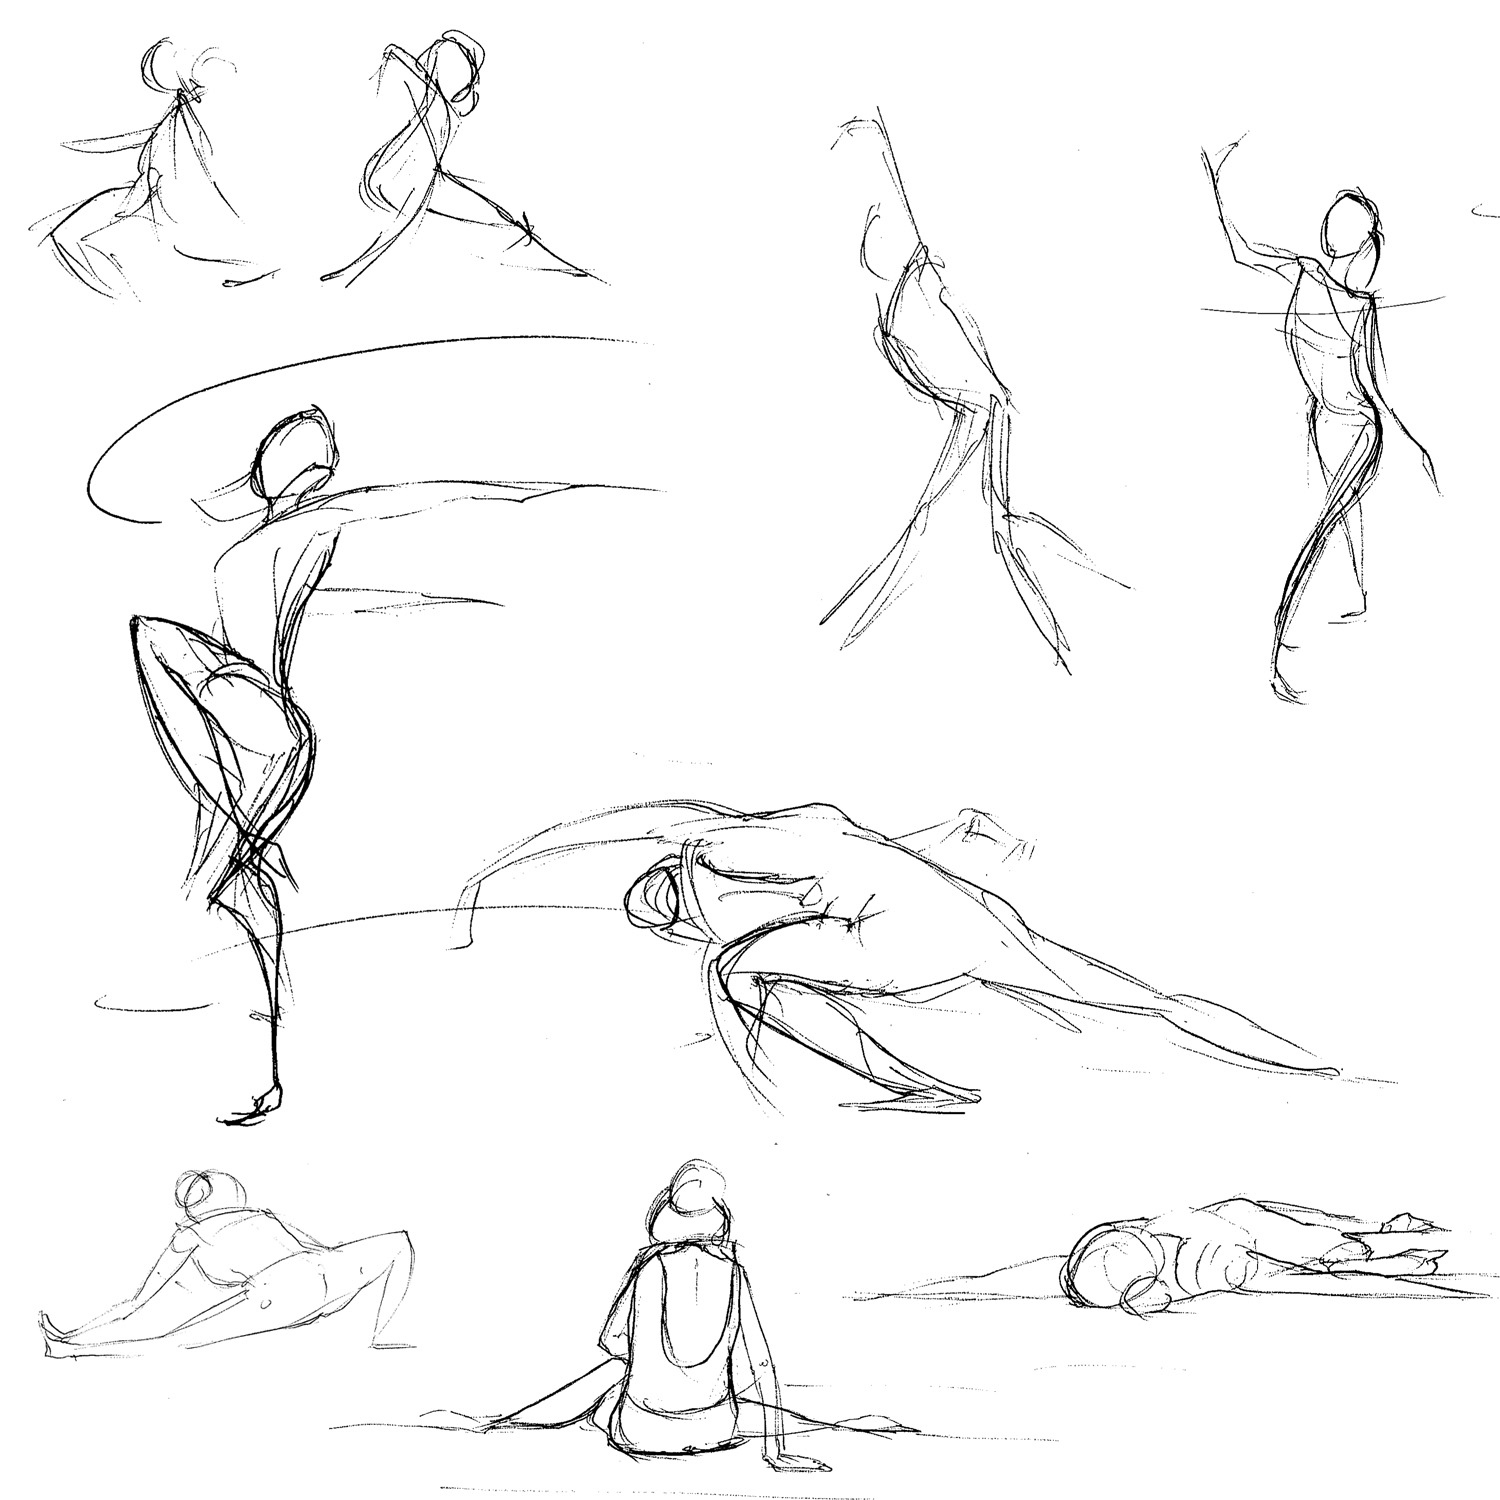 Cafe Sketch - Fall 2011: Ballet Met Ya'll